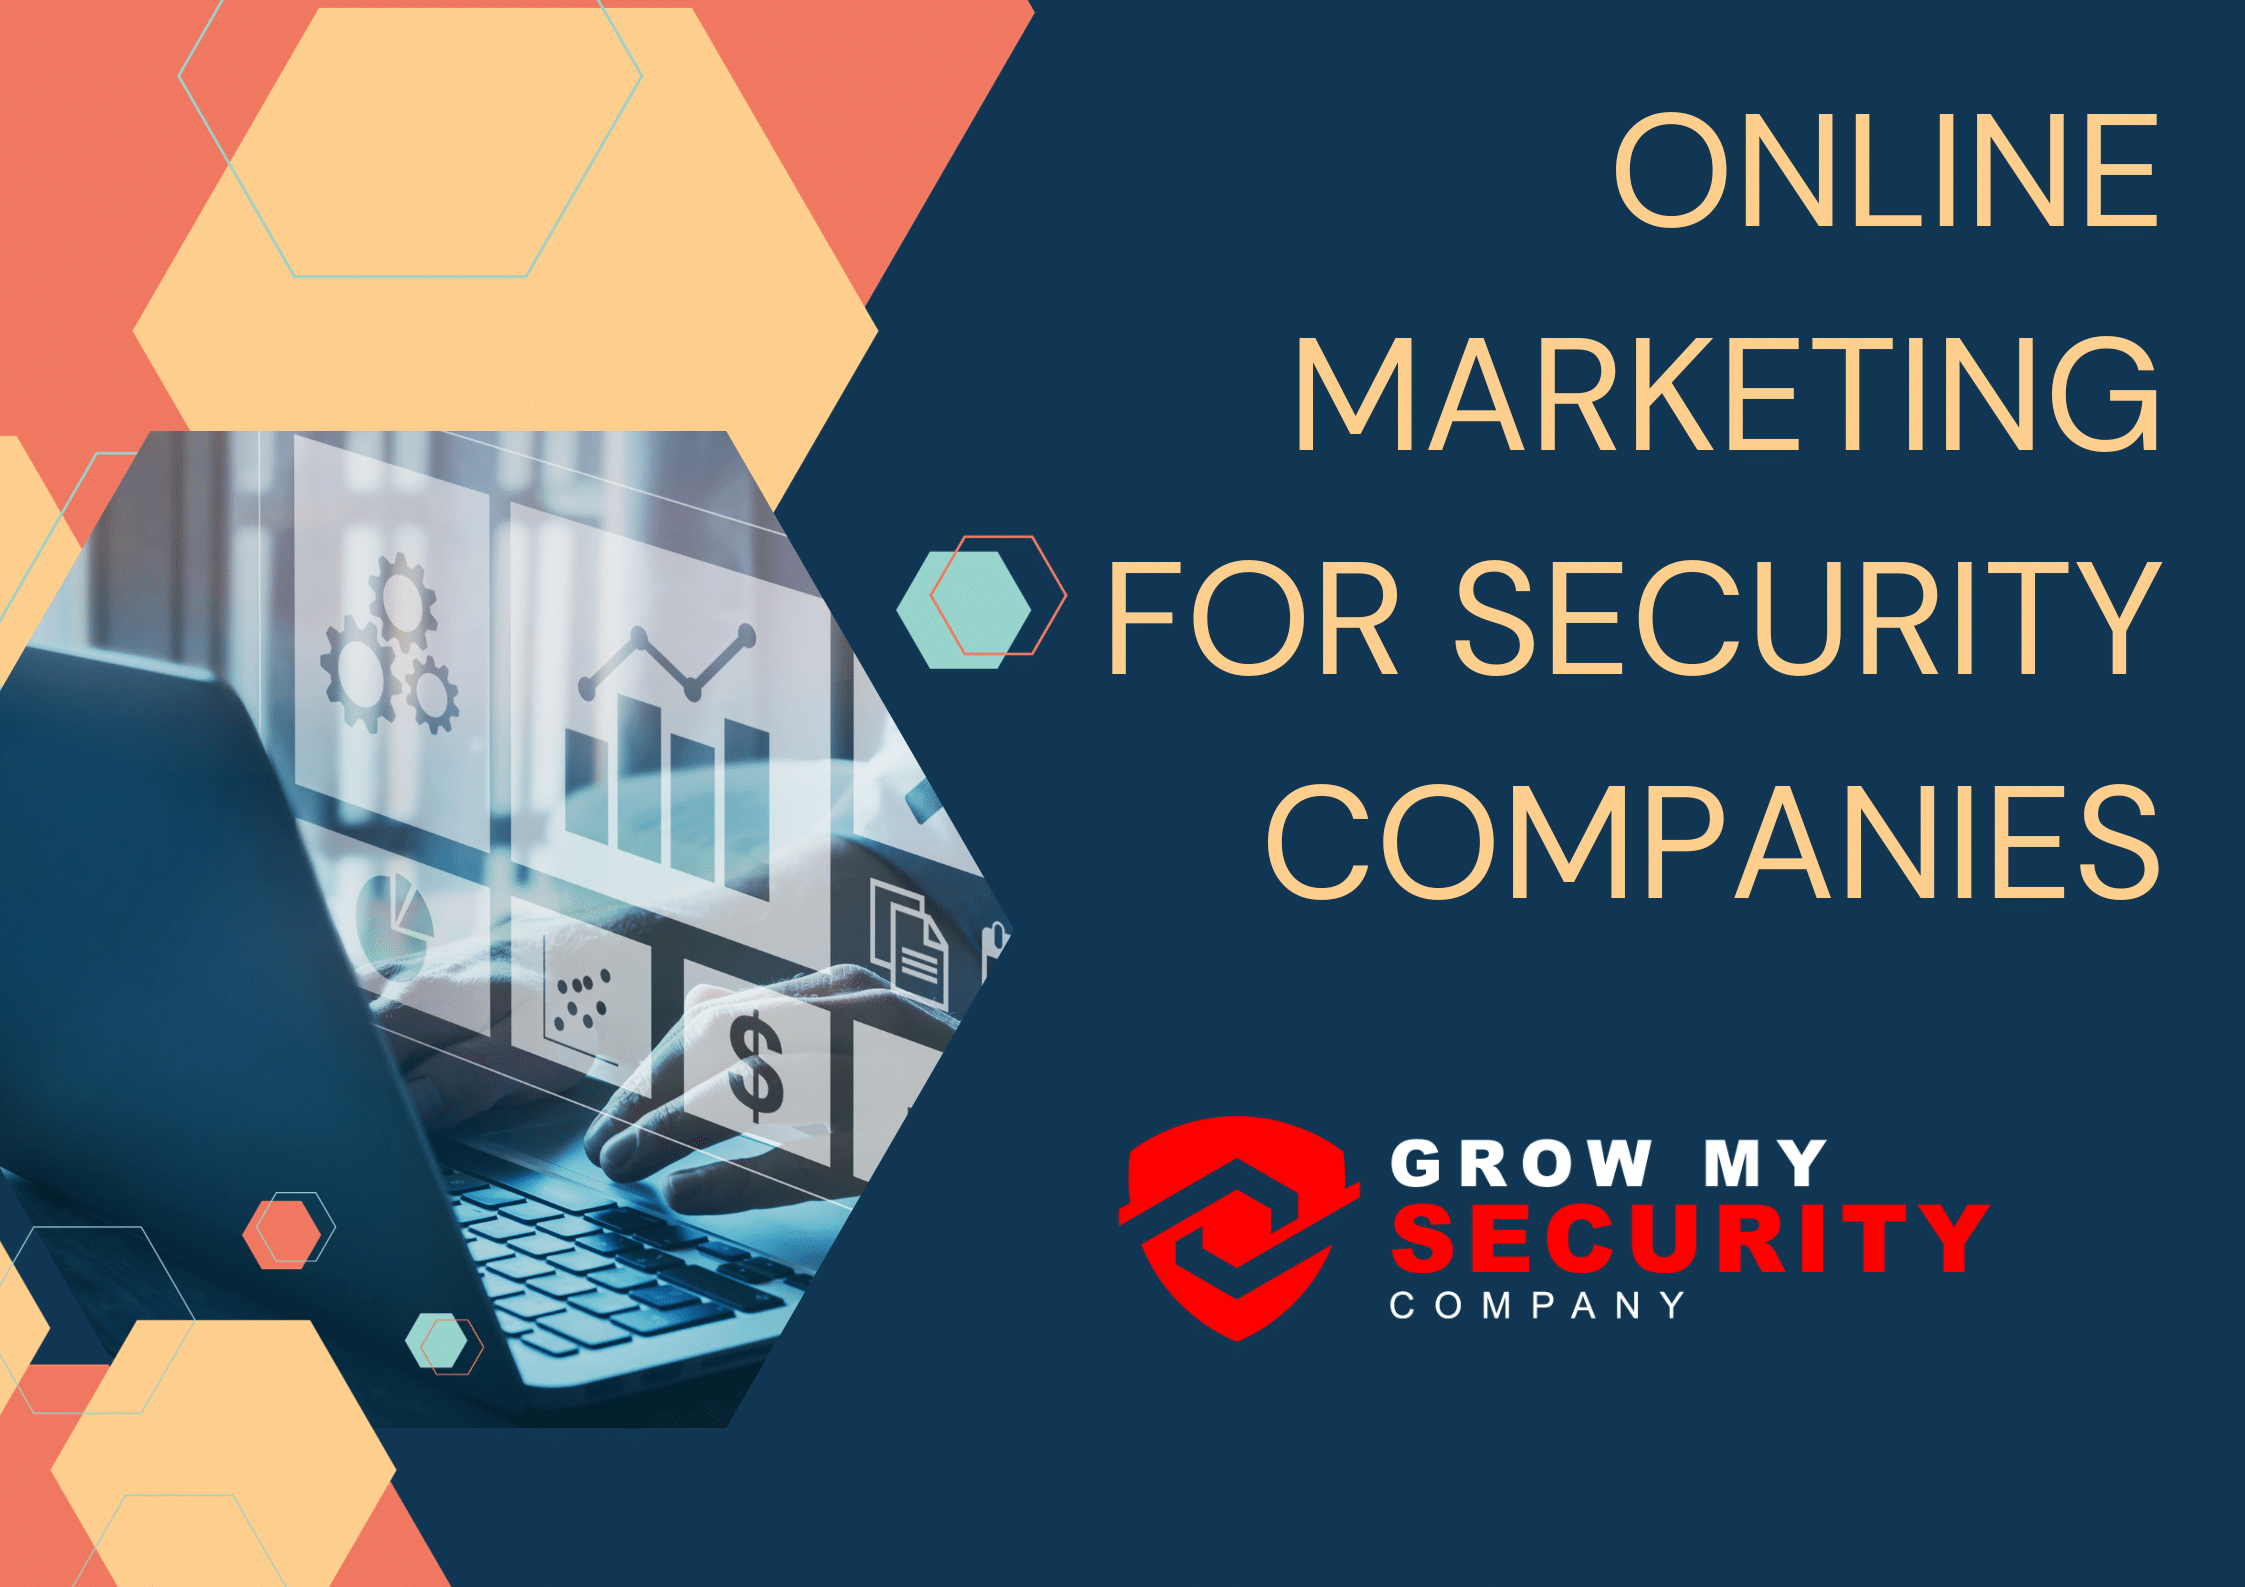 Security Company Online Marketing Strategies